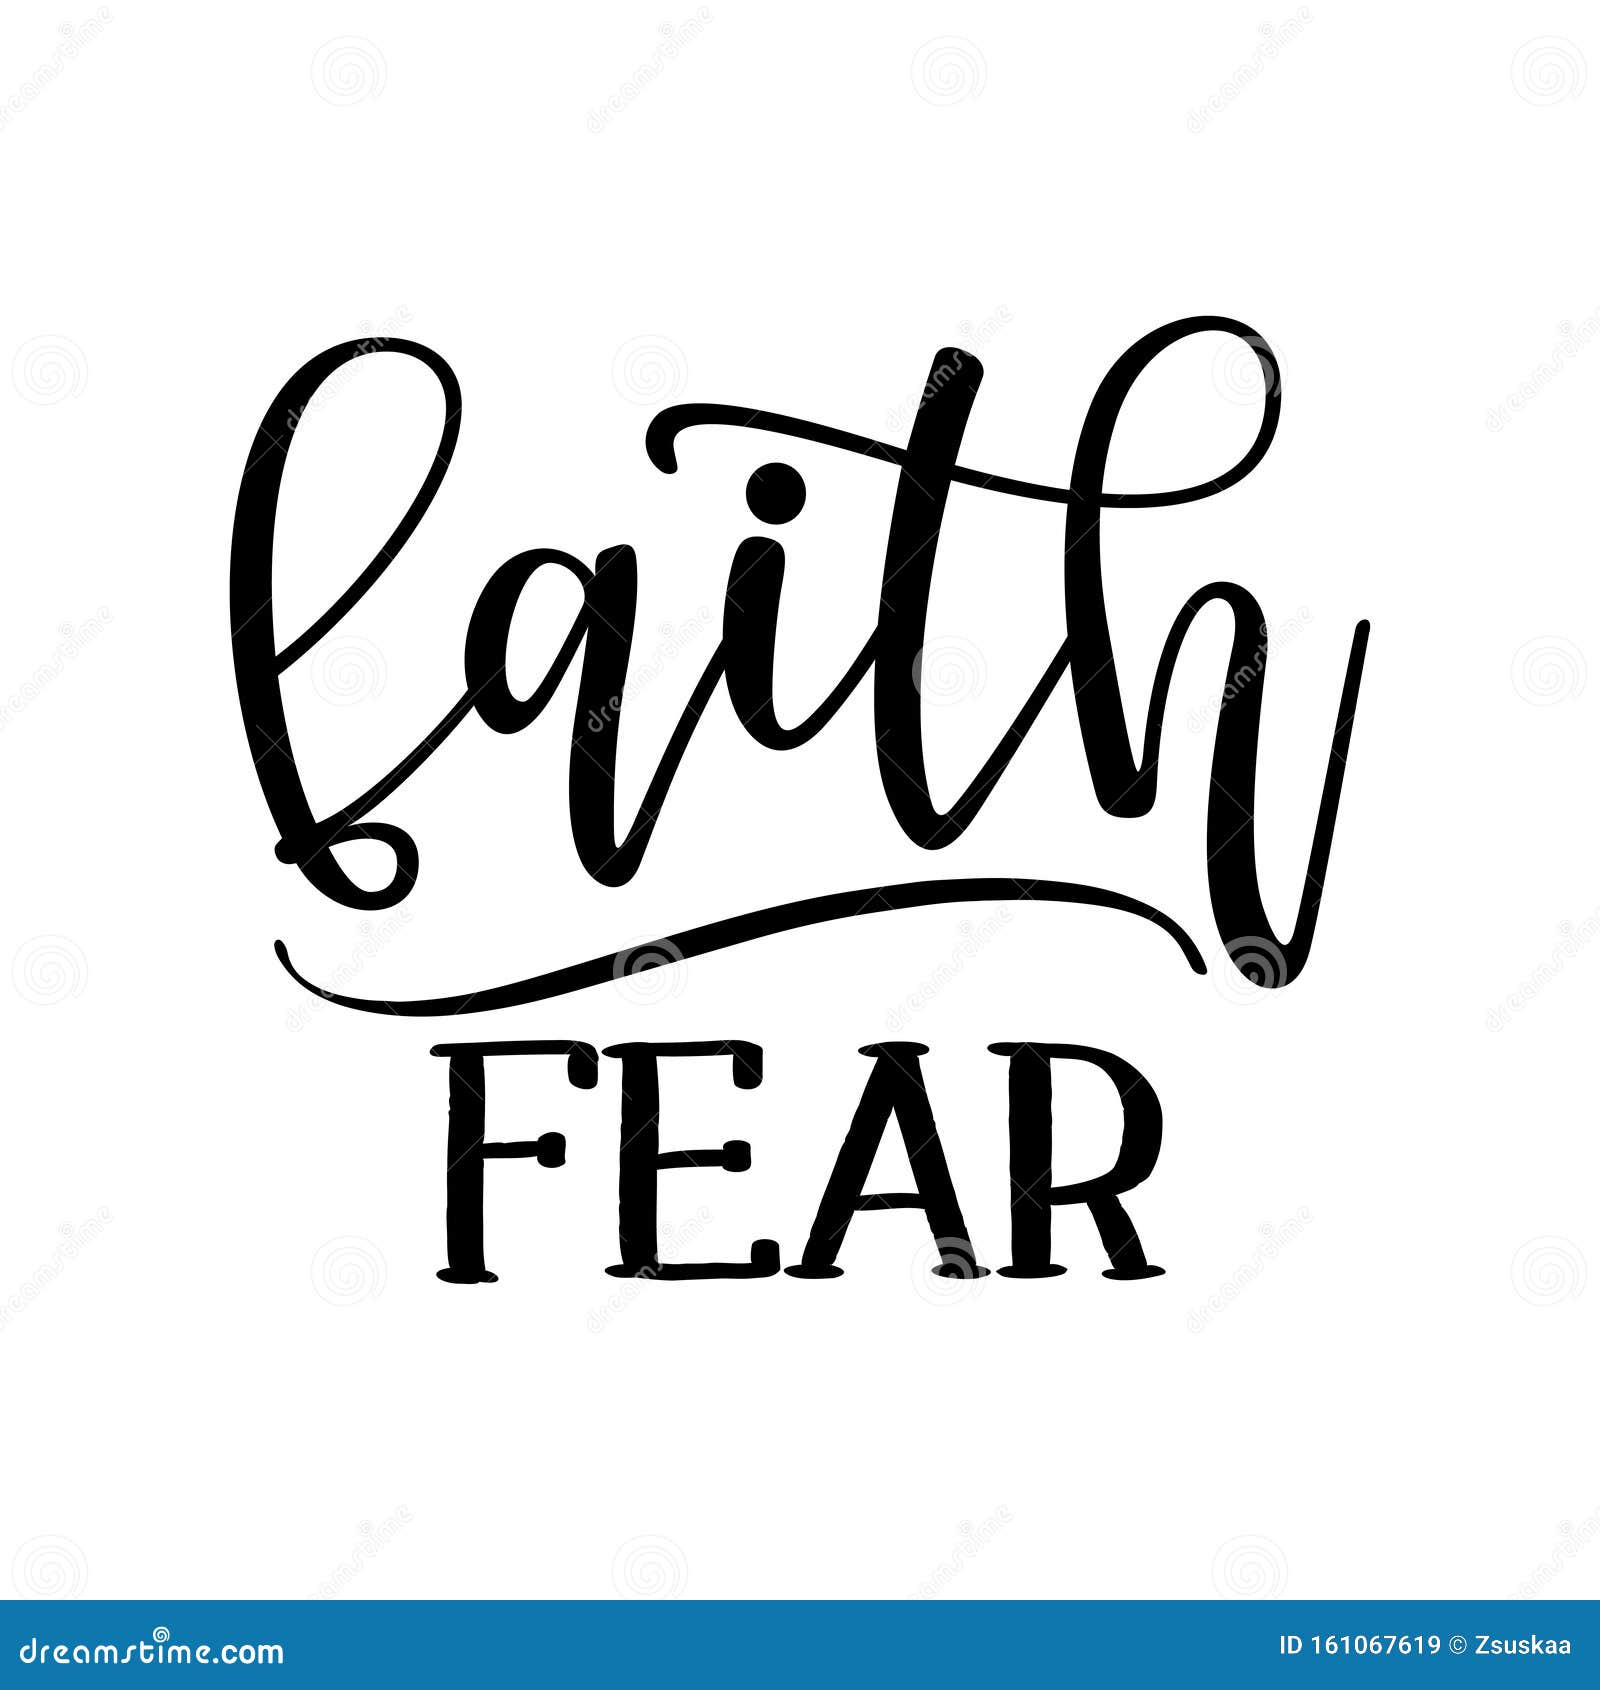 Faith Over the Fear Tattoo Meaning  Amazing Design Ideas  Tattoo Twist